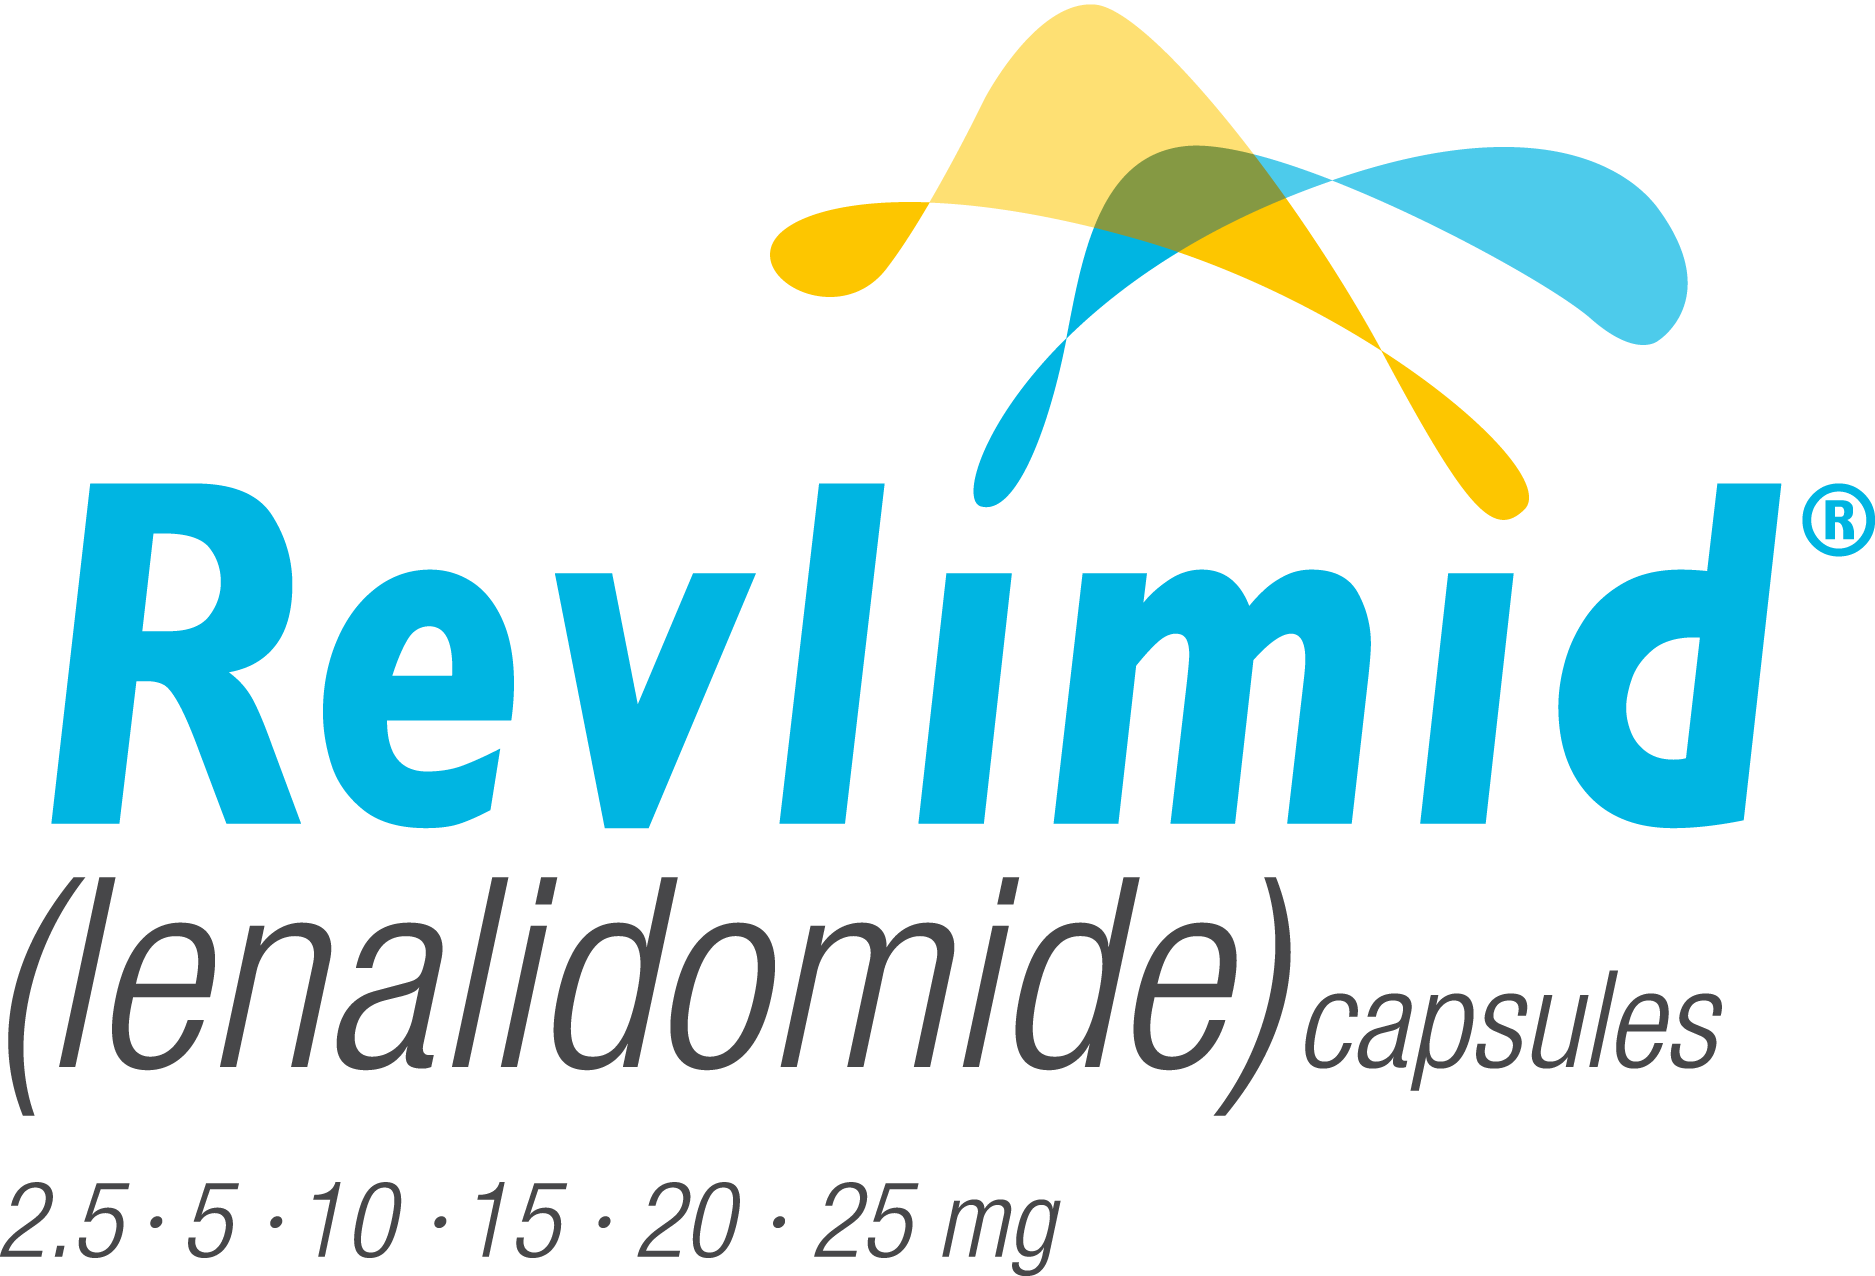 REVLIMID® (lenalidomide) logo